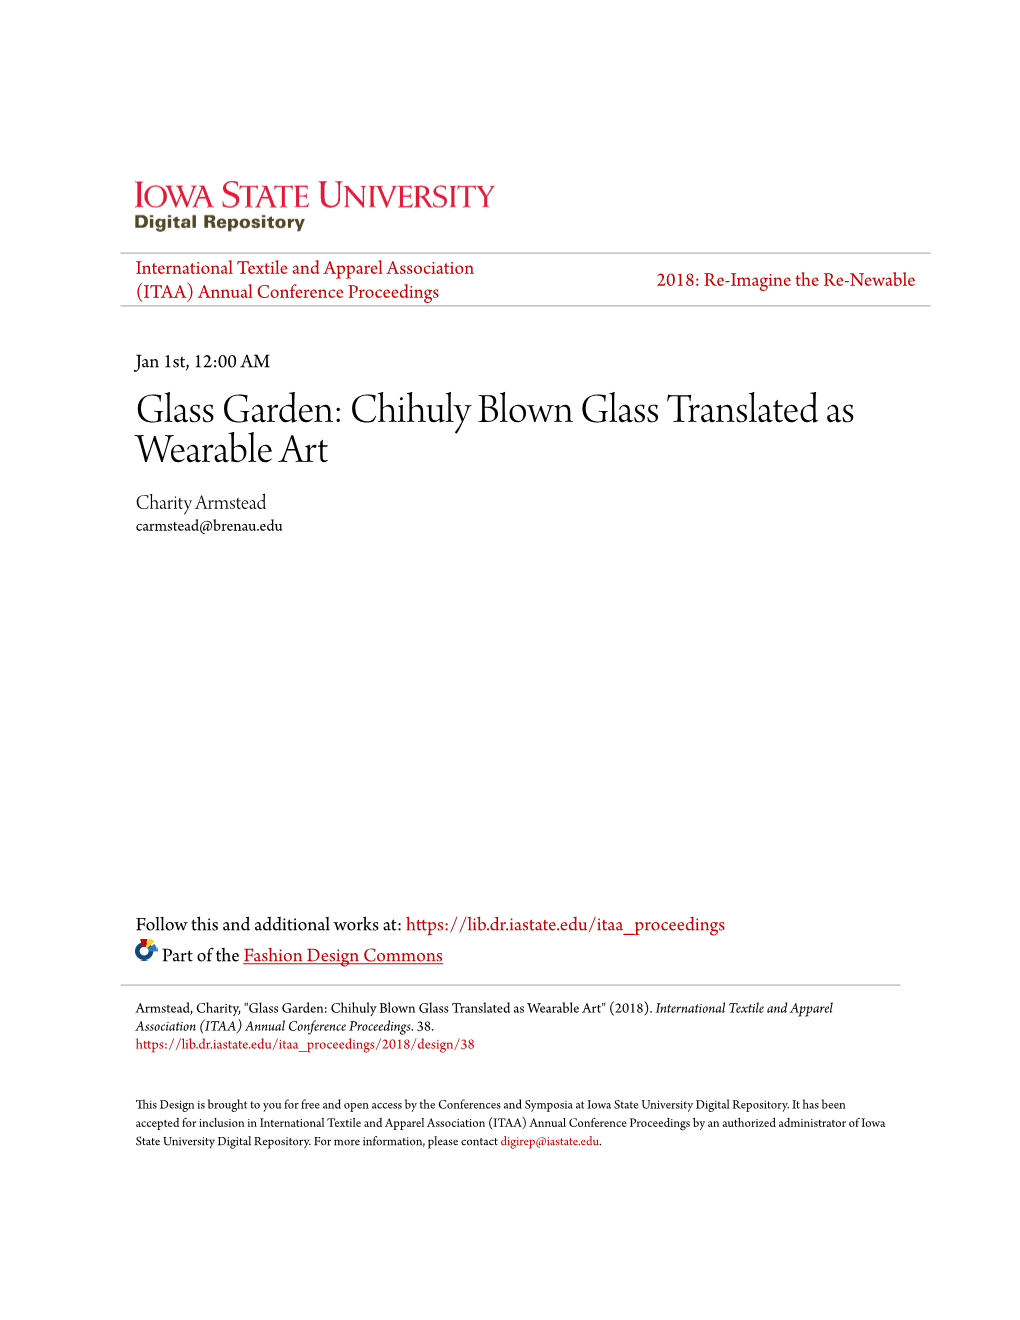 Glass Garden: Chihuly Blown Glass Translated As Wearable Art Charity Armstead Carmstead@Brenau.Edu